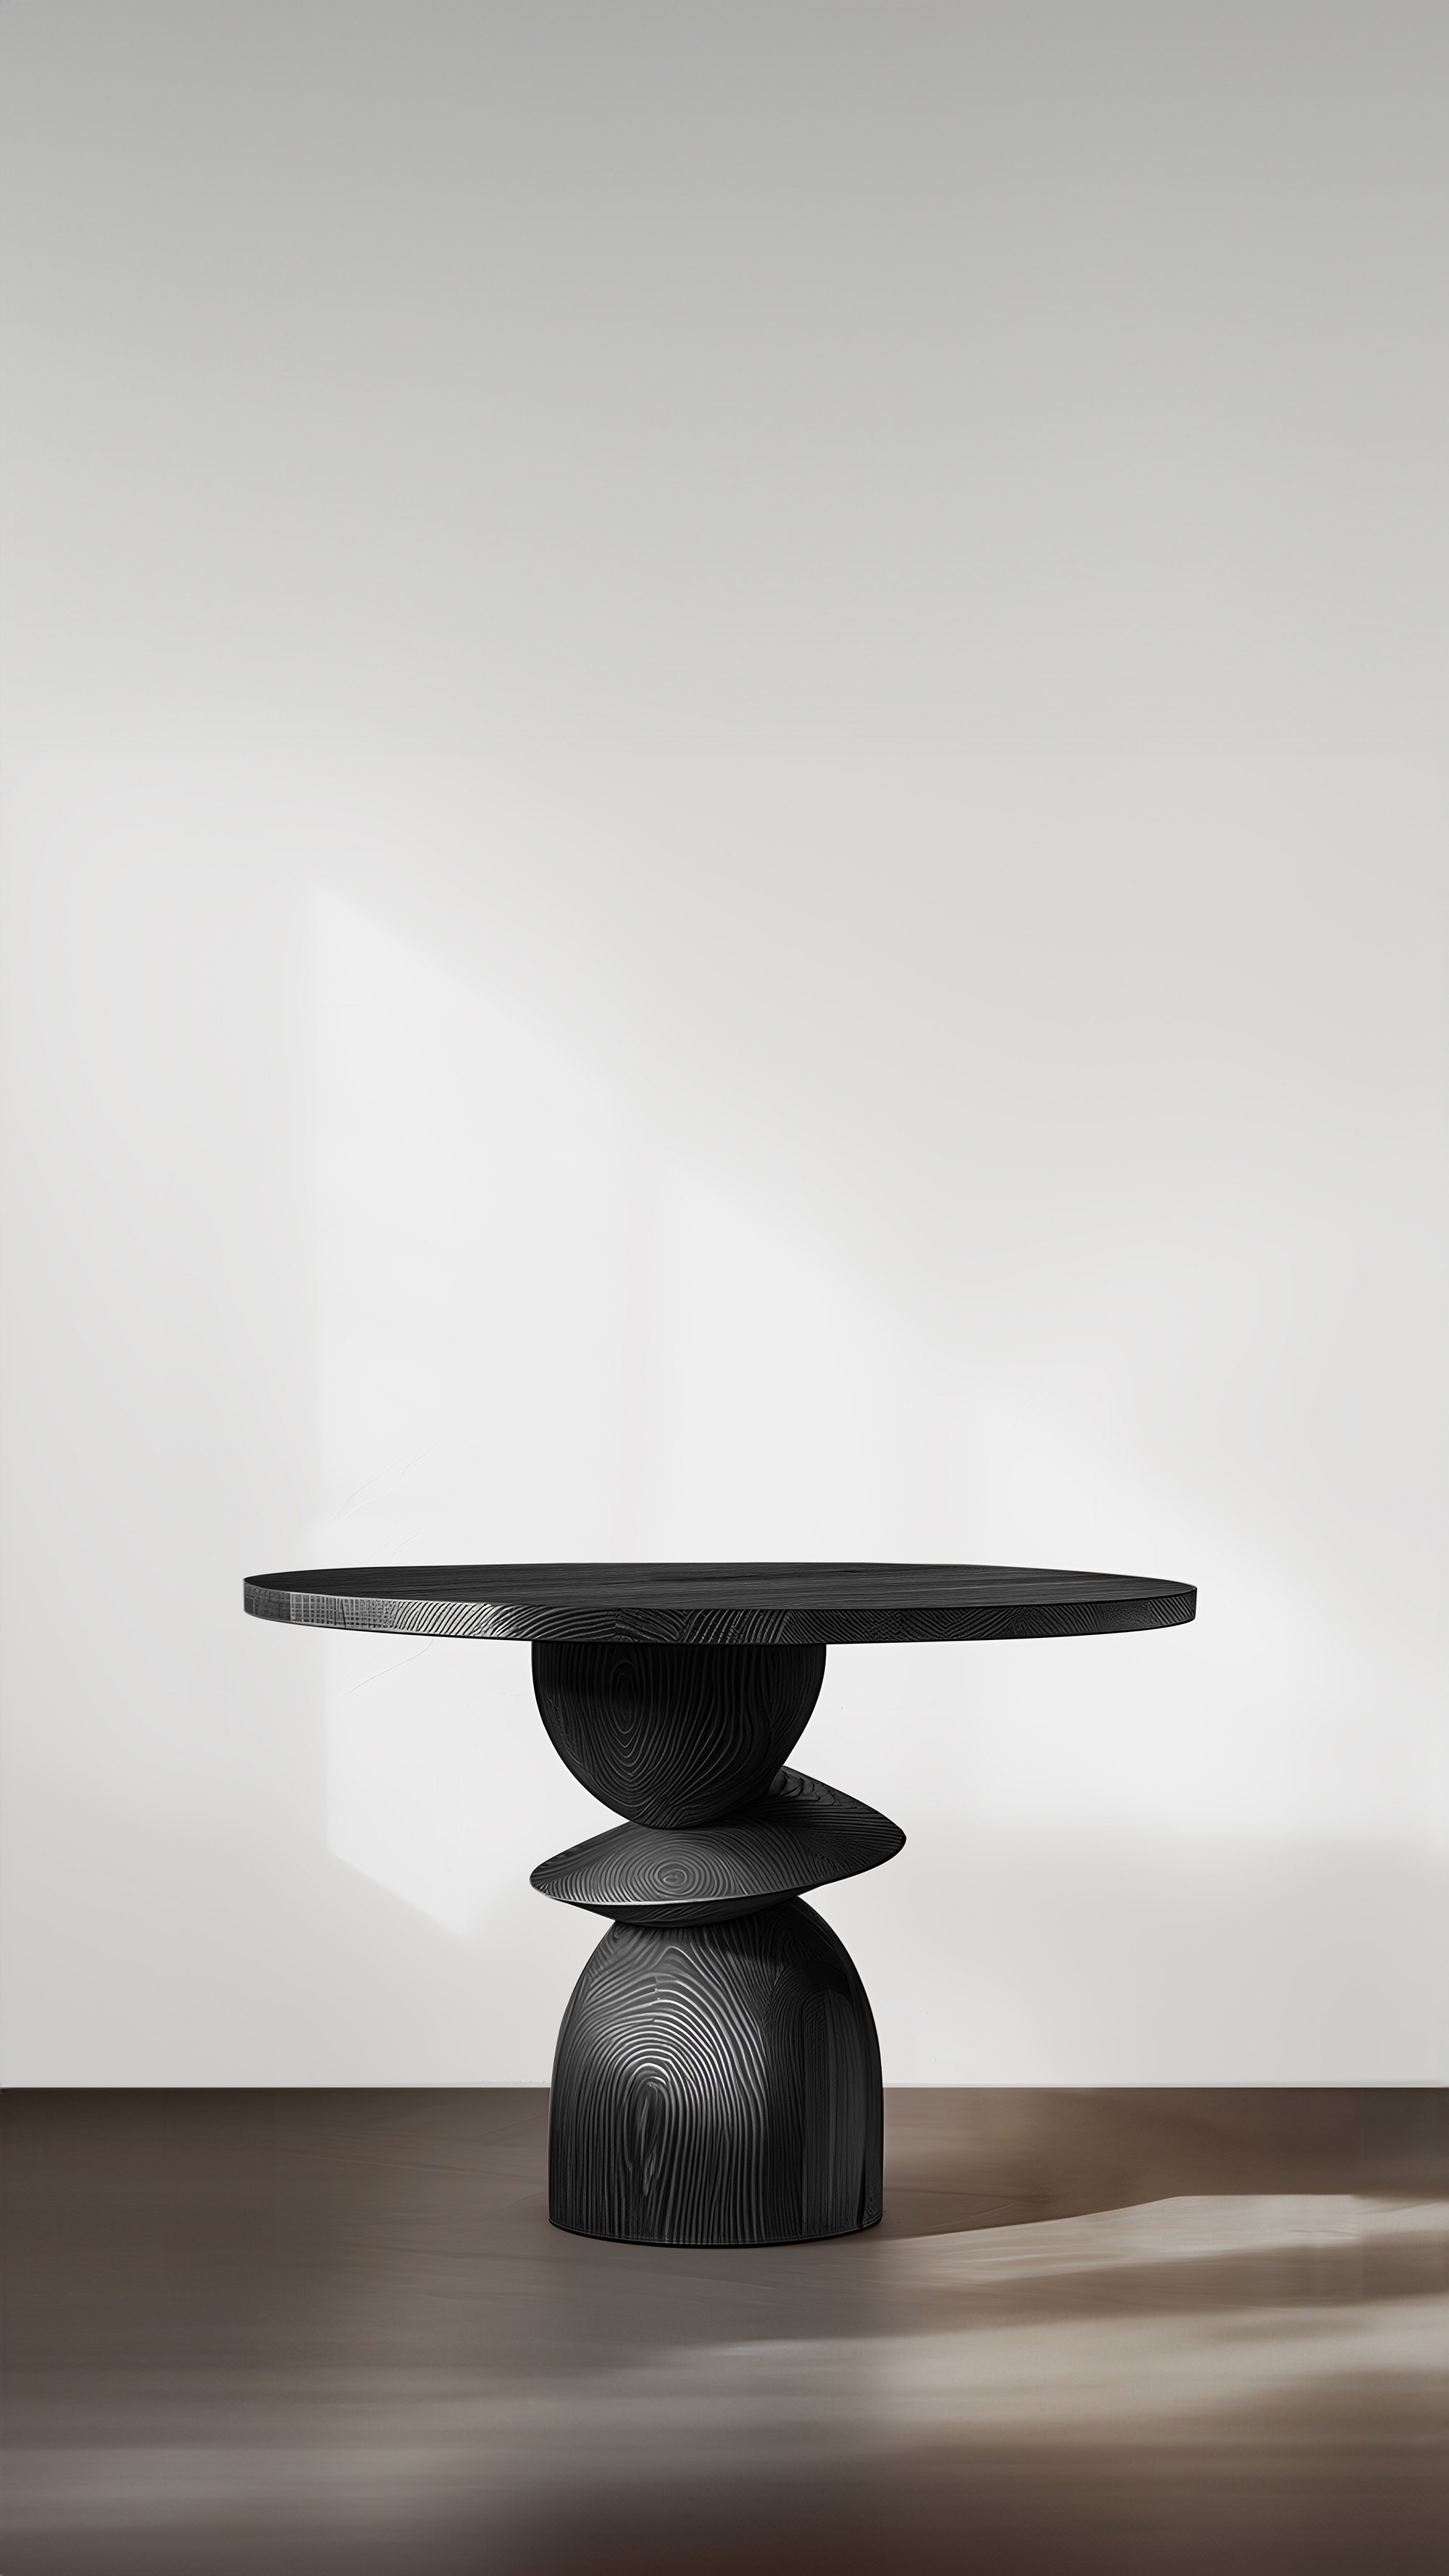 Socle Console Tables, Sleek Design in Black Wood by Joel Escalona No24 - 4.jpg